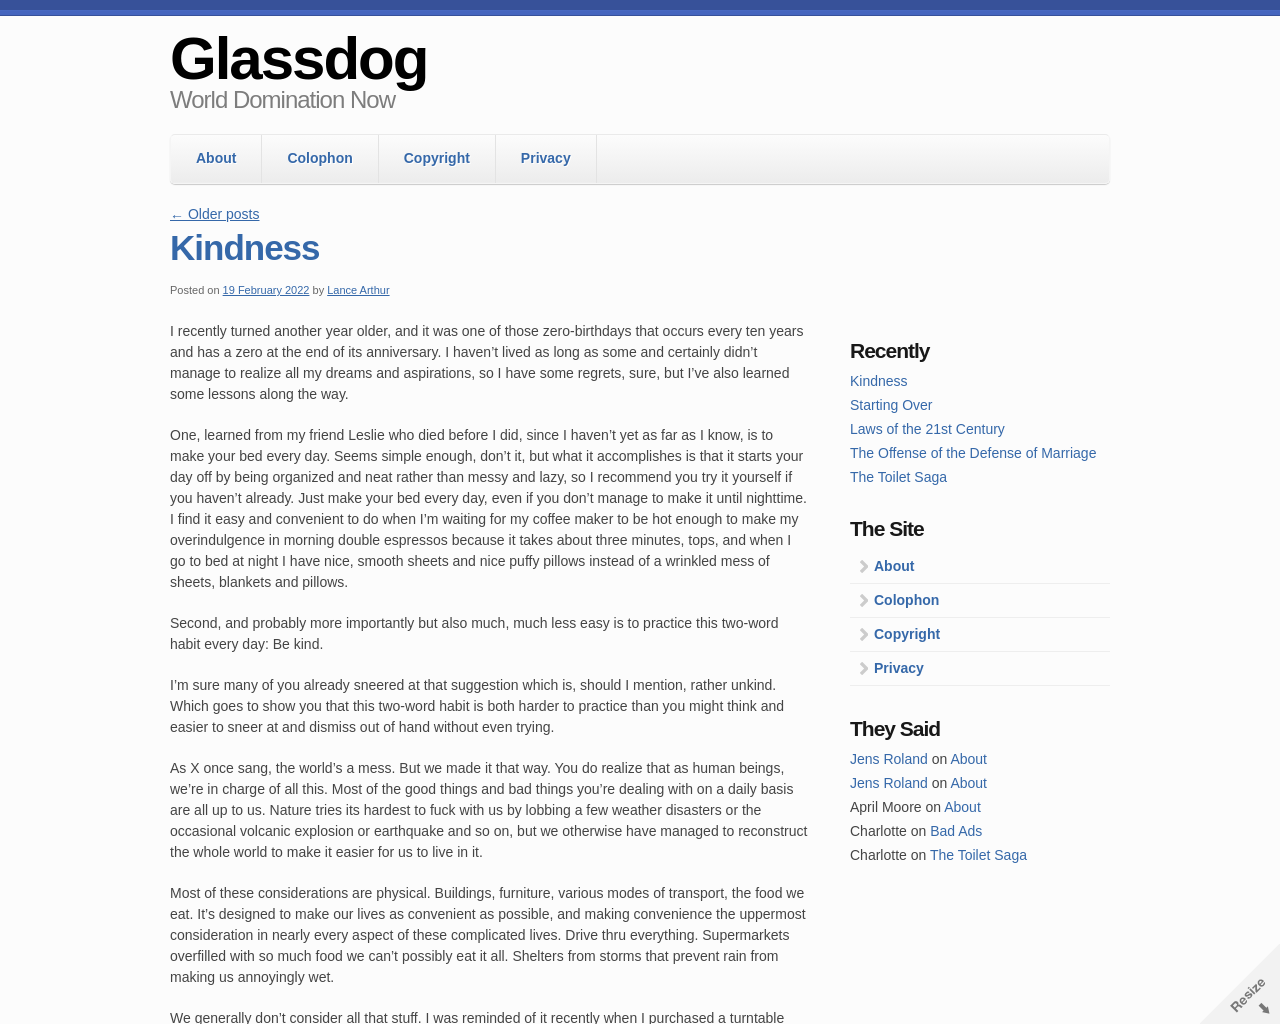 glassdog.com